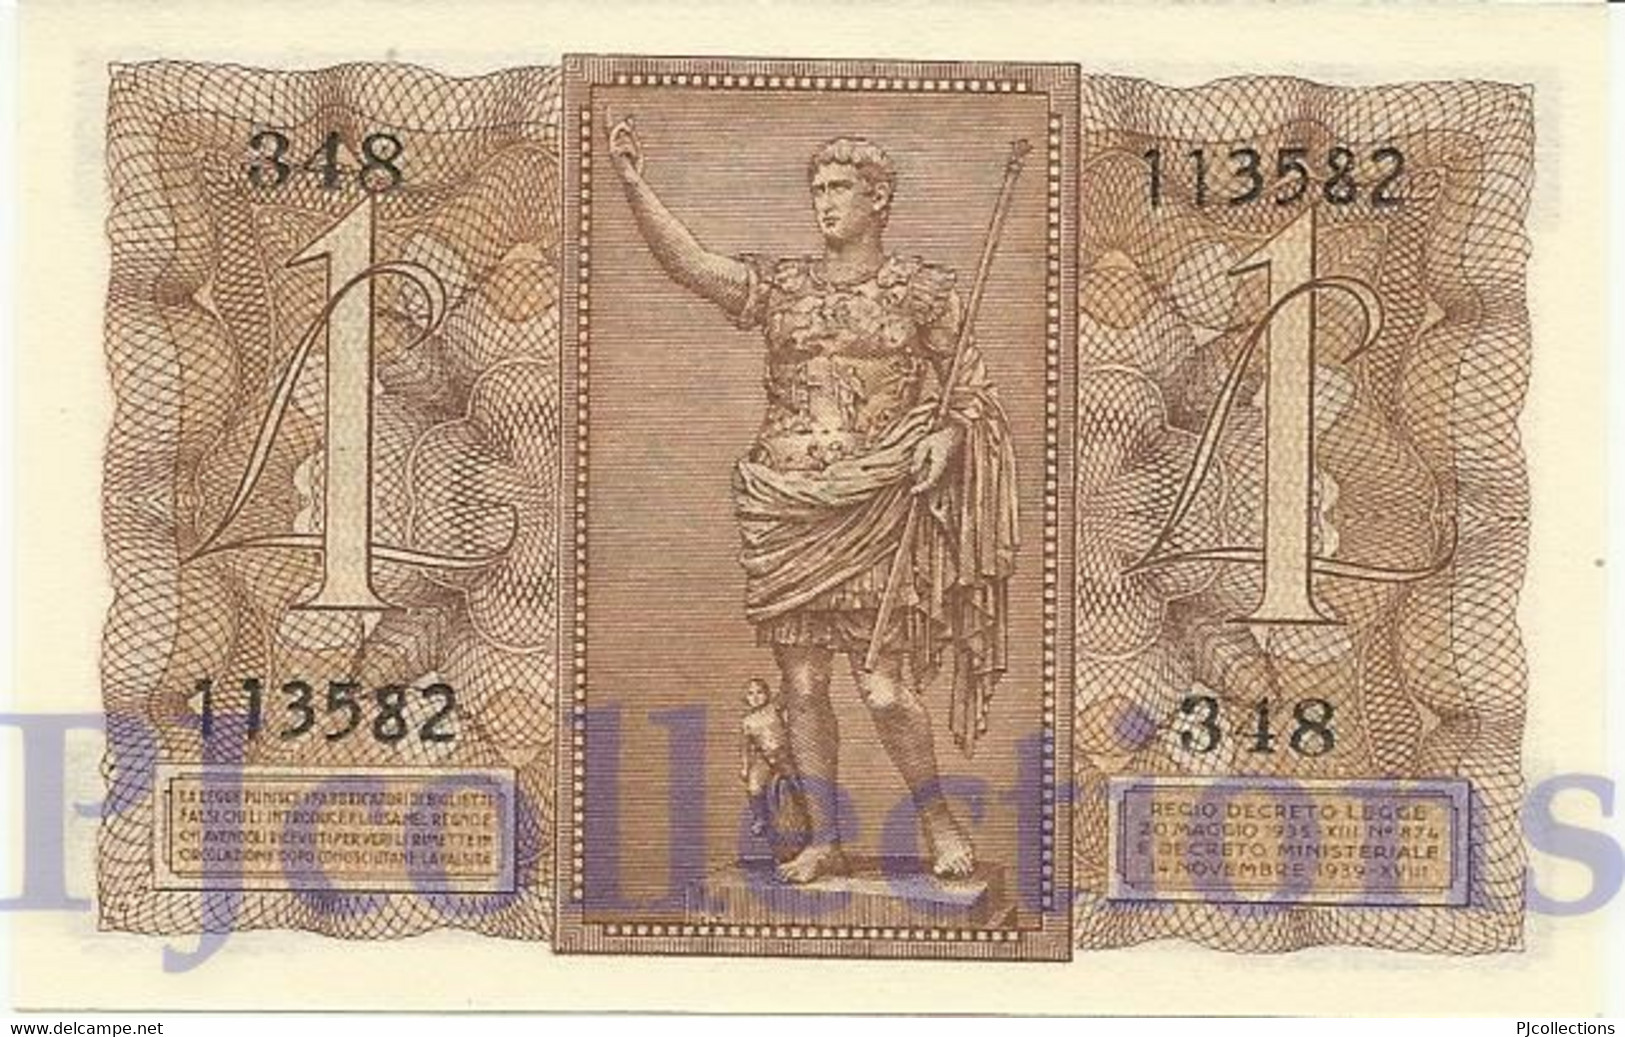 ITALY 1 LIRA 1939 PICK 26 UNC - Italië – 1 Lira